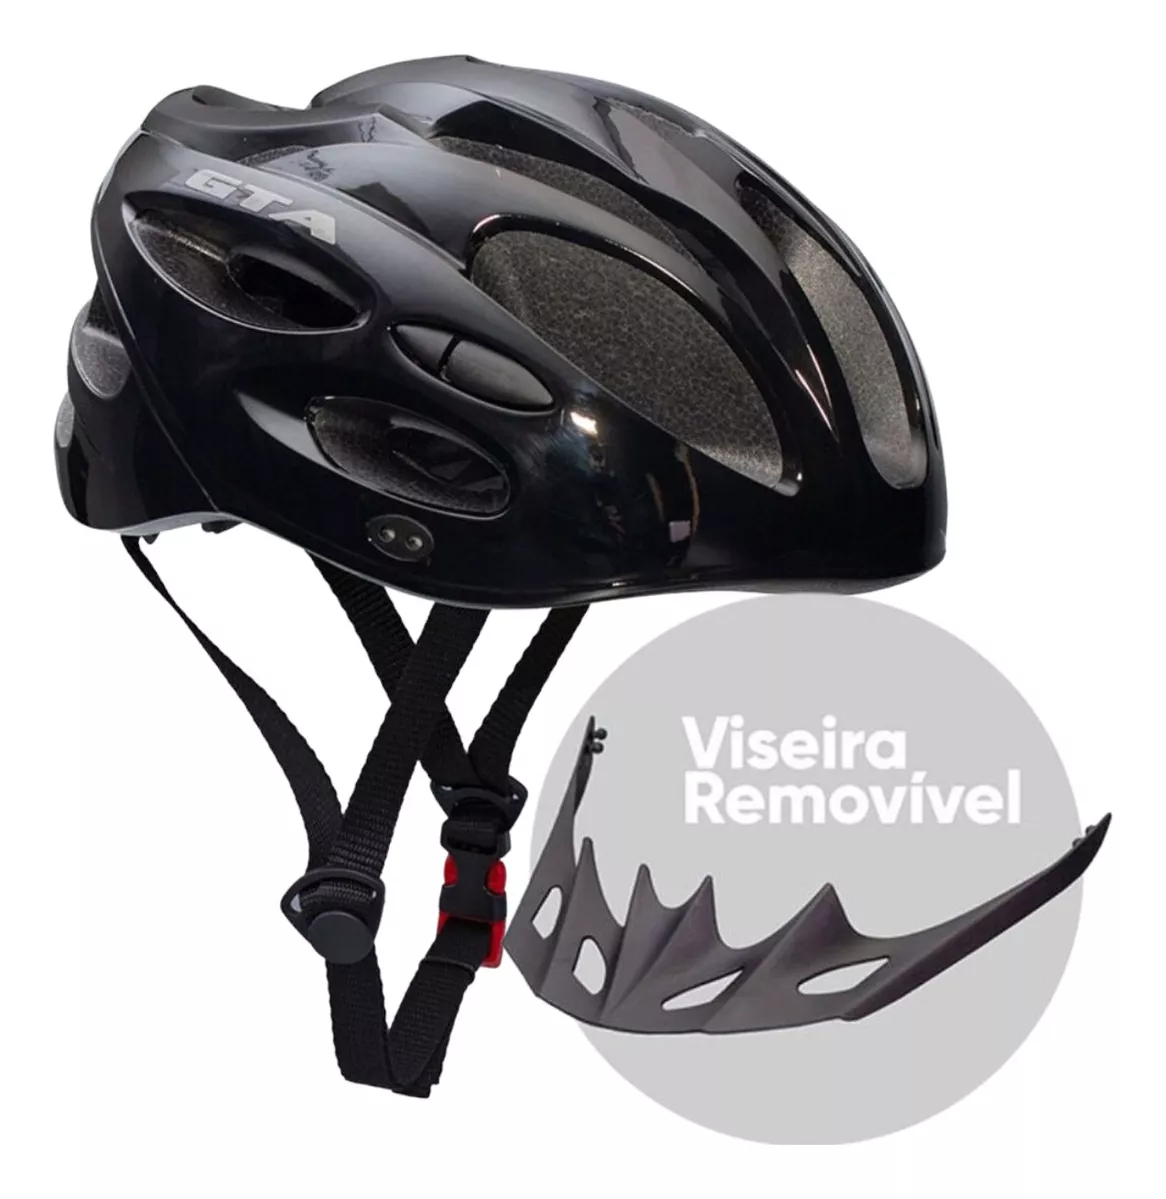 Segunda imagem para pesquisa de capacete ciclismo masculino